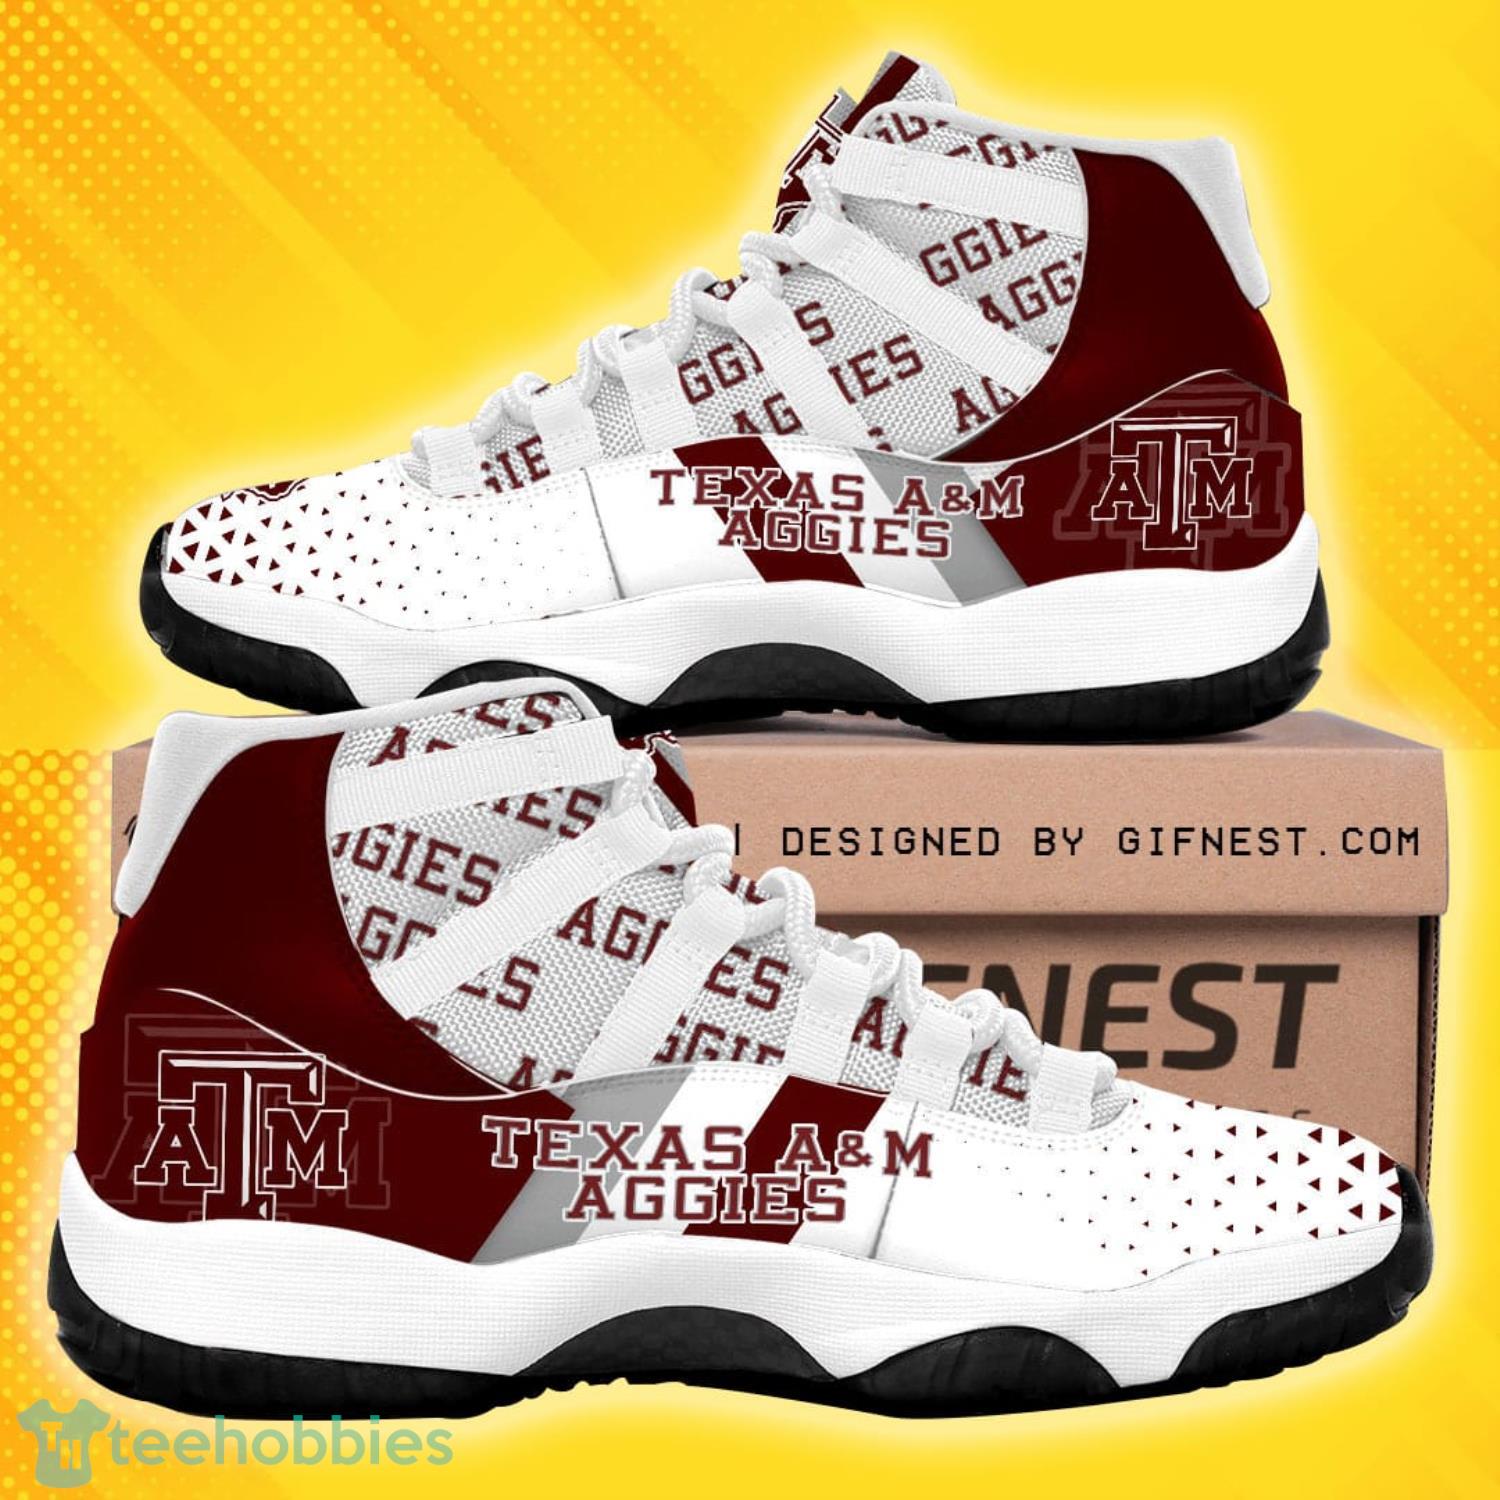 Texas Aggies Team Air Jordan 11 Shoes For Fans Product Photo 1